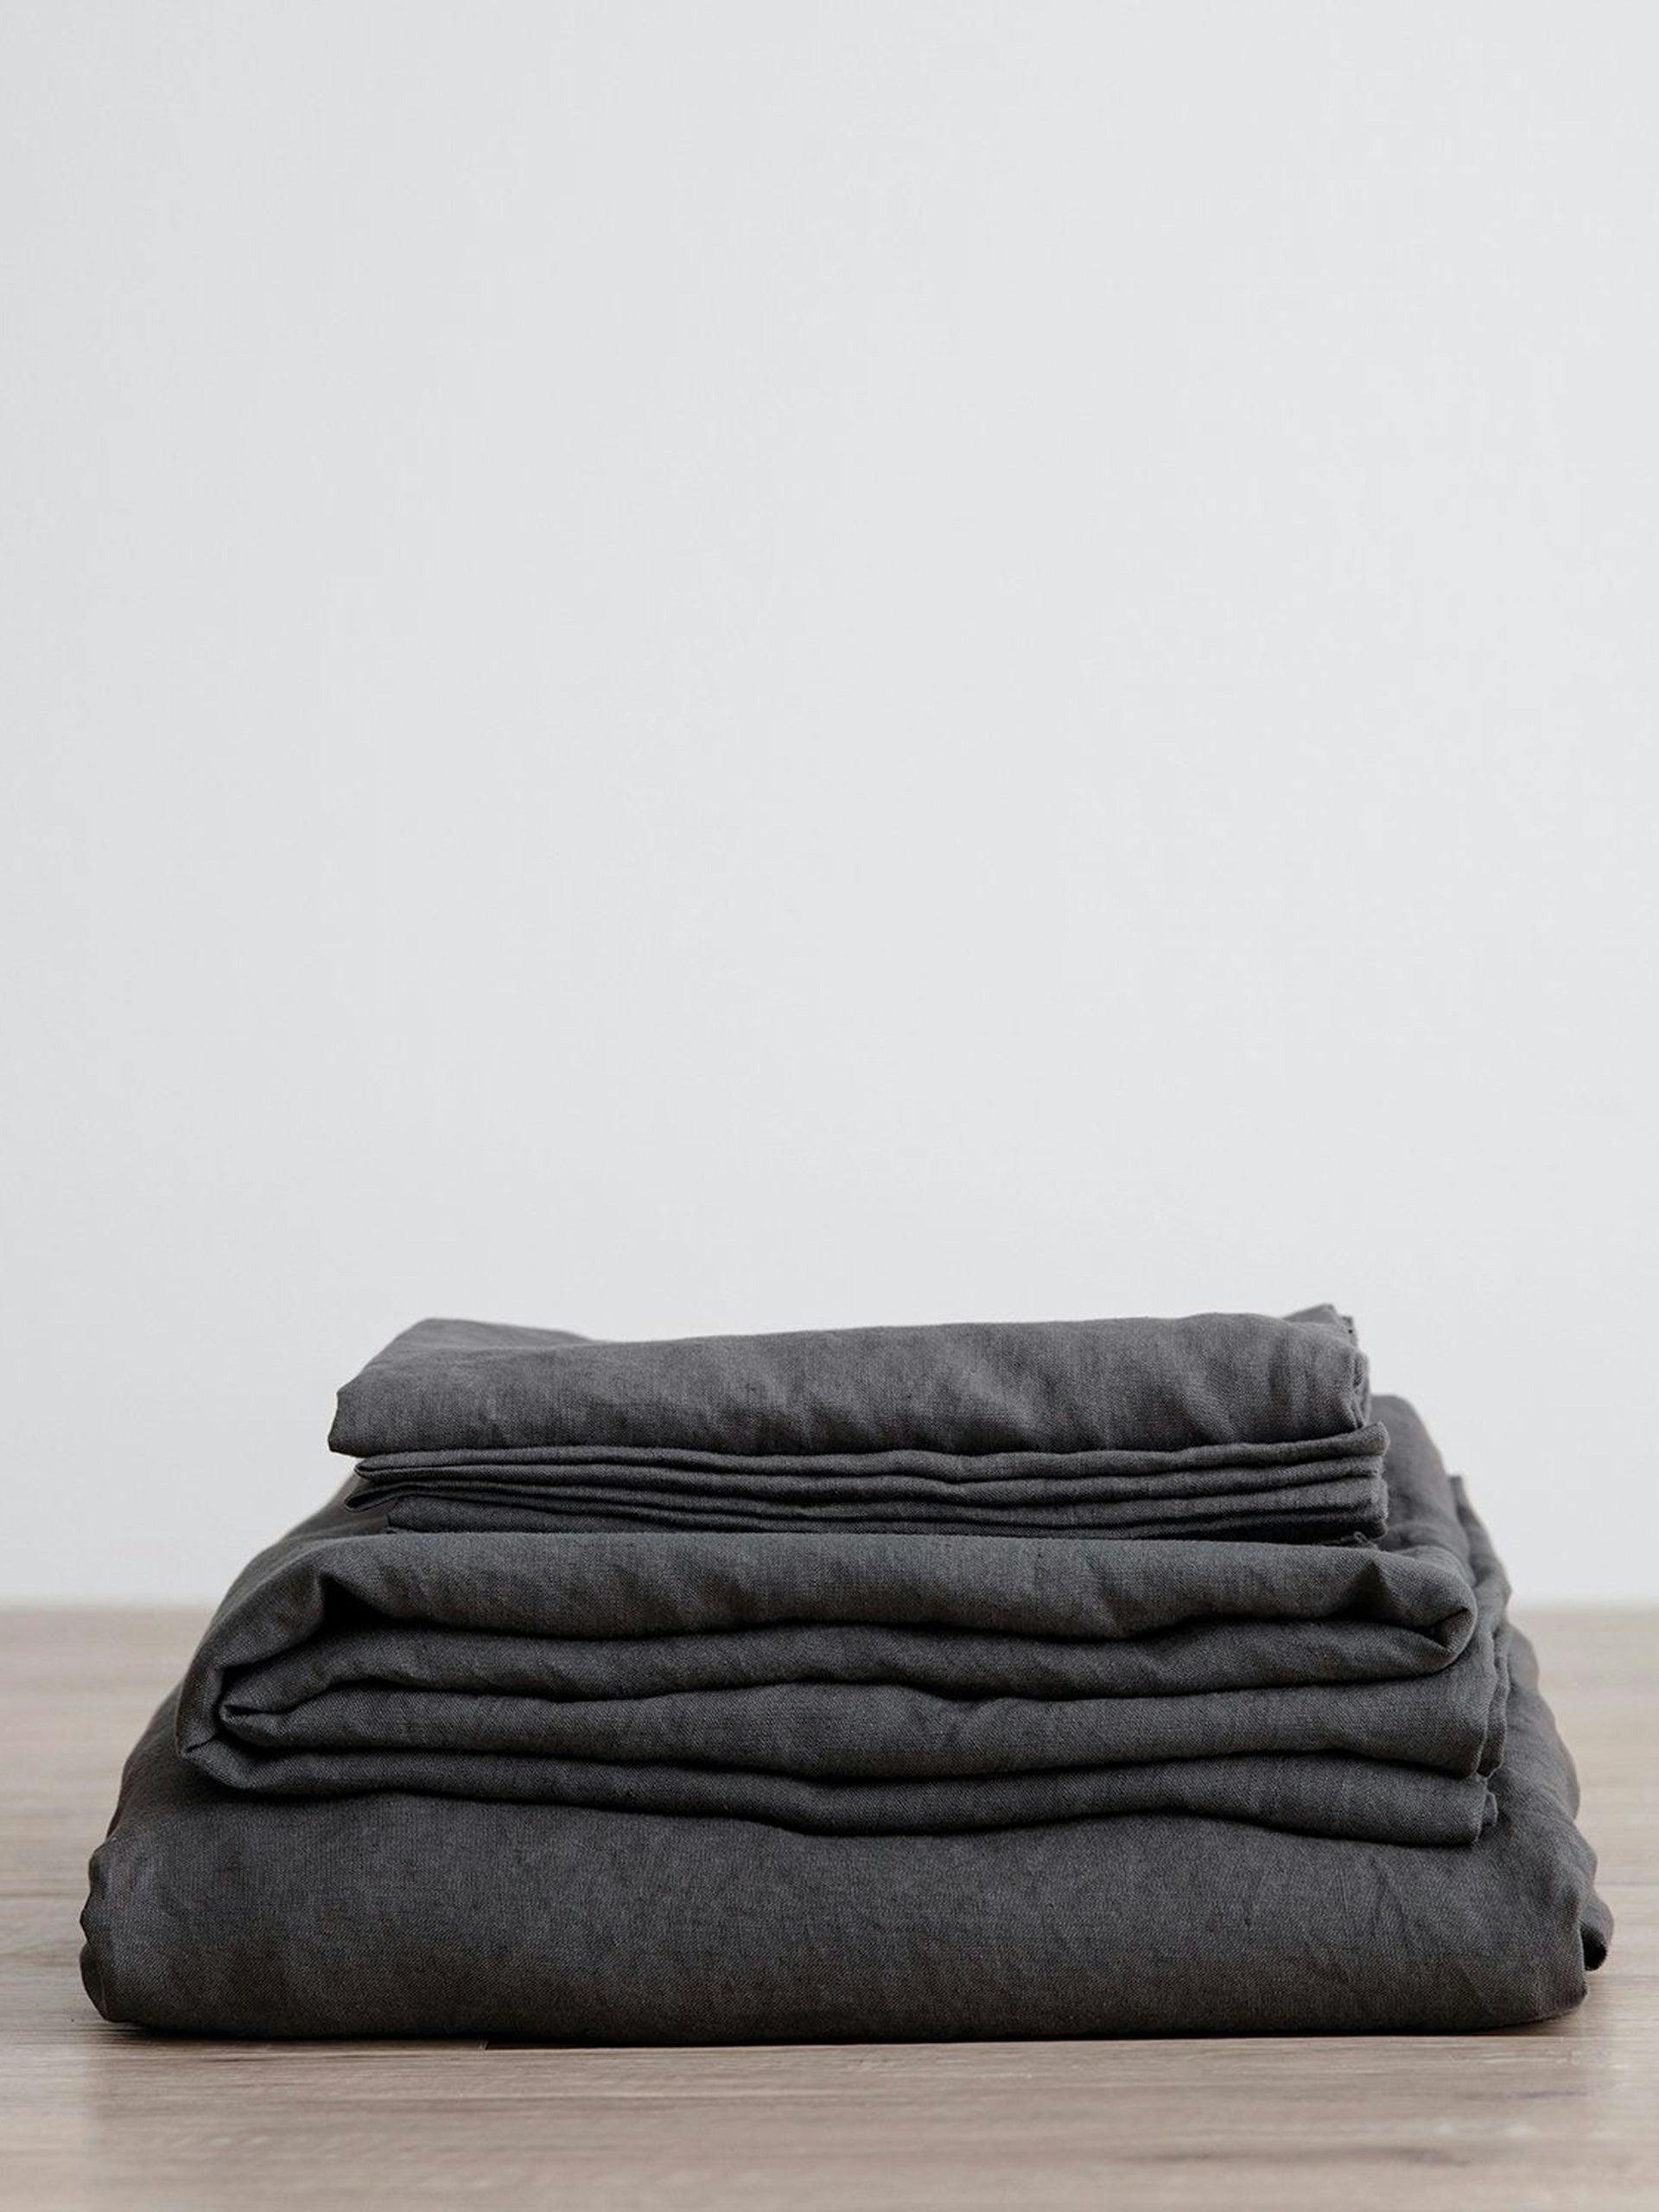 Slate linen sheet set with pillowcases